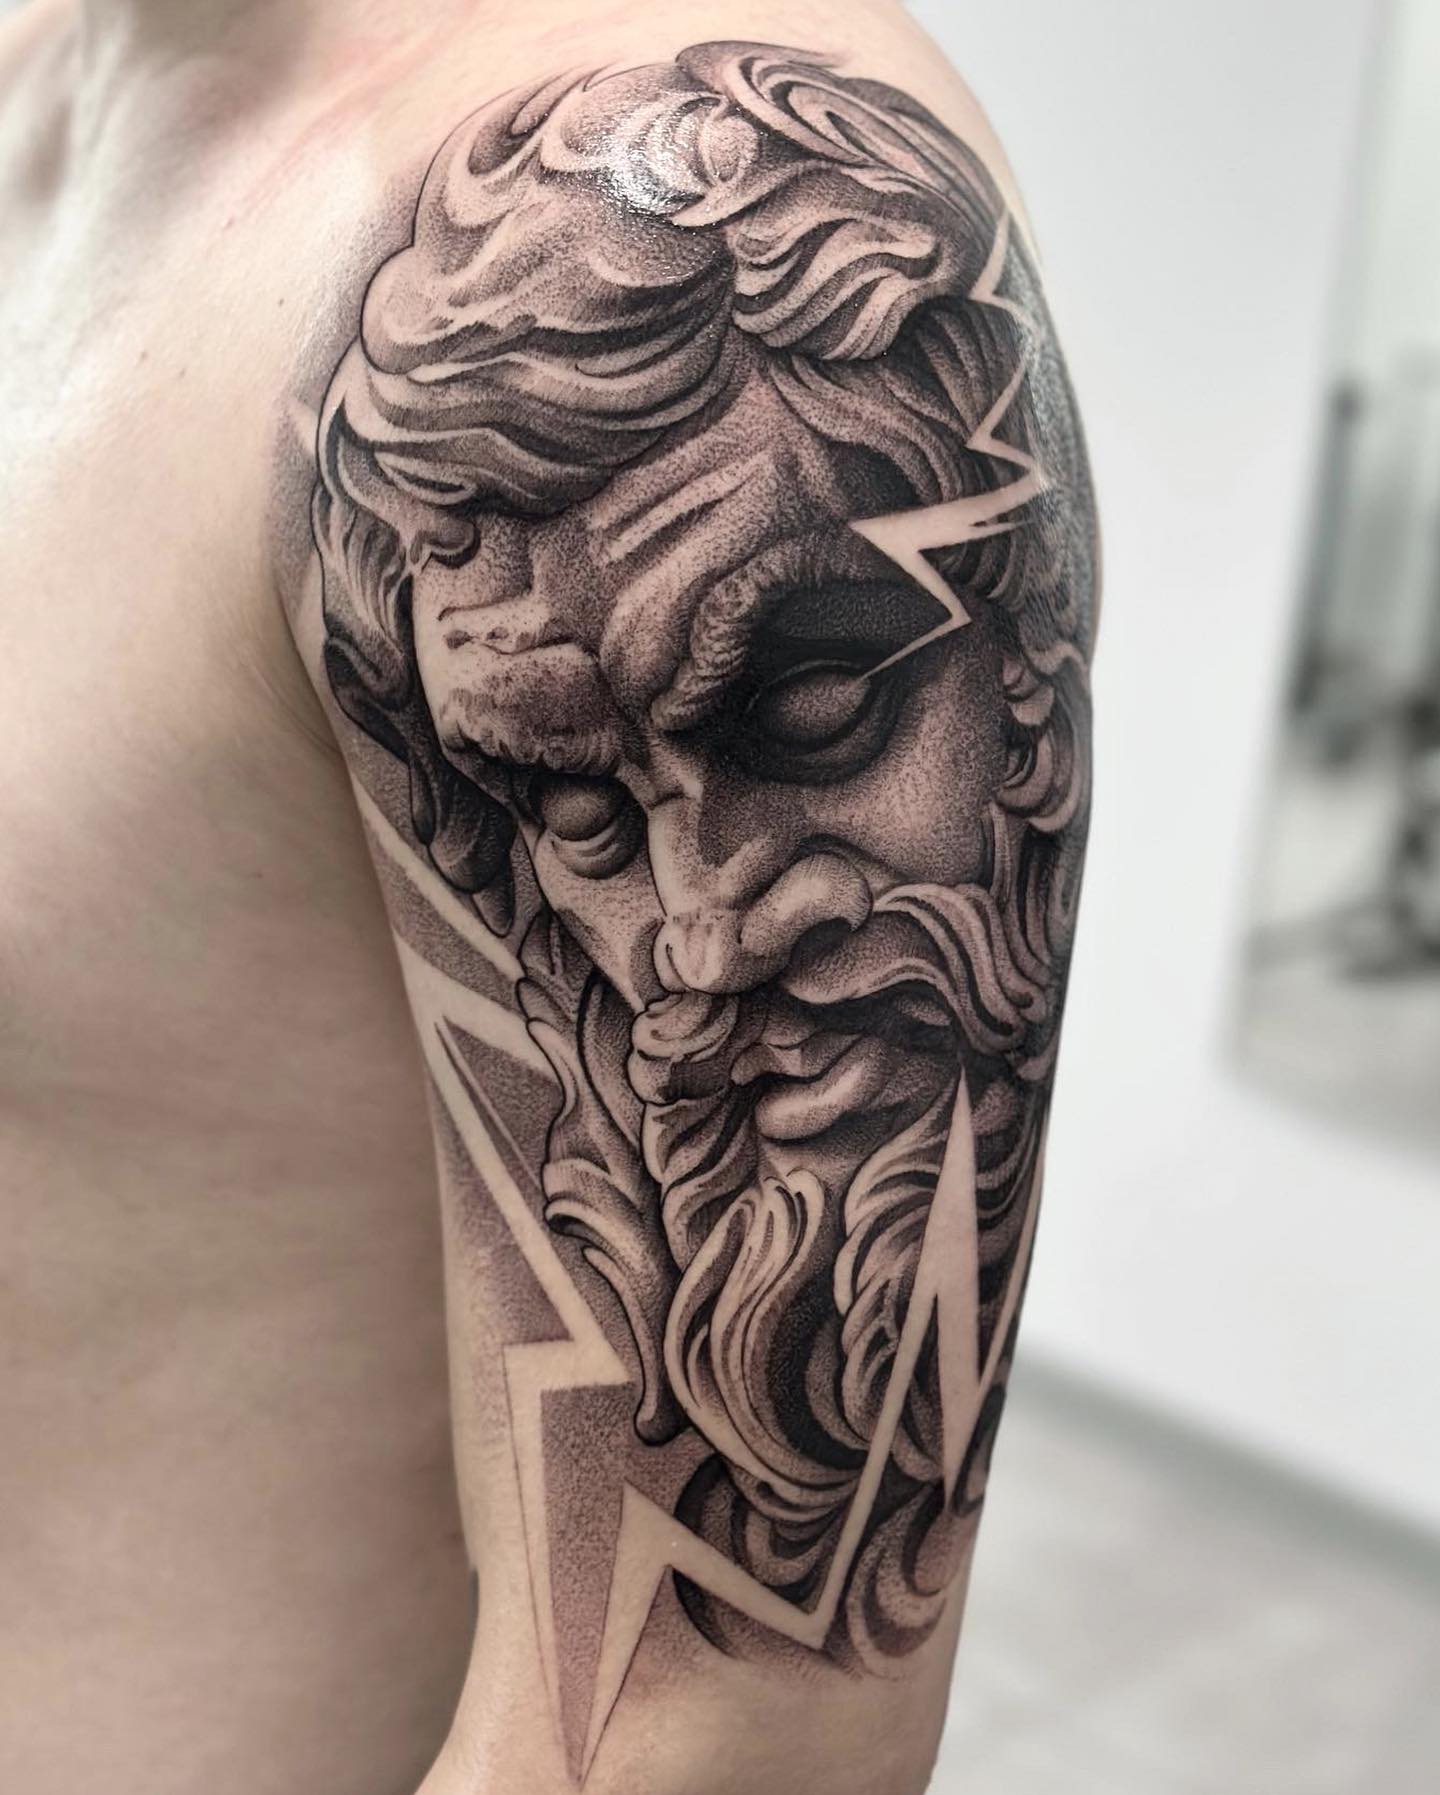 Zeus Tattoo Ideas 22